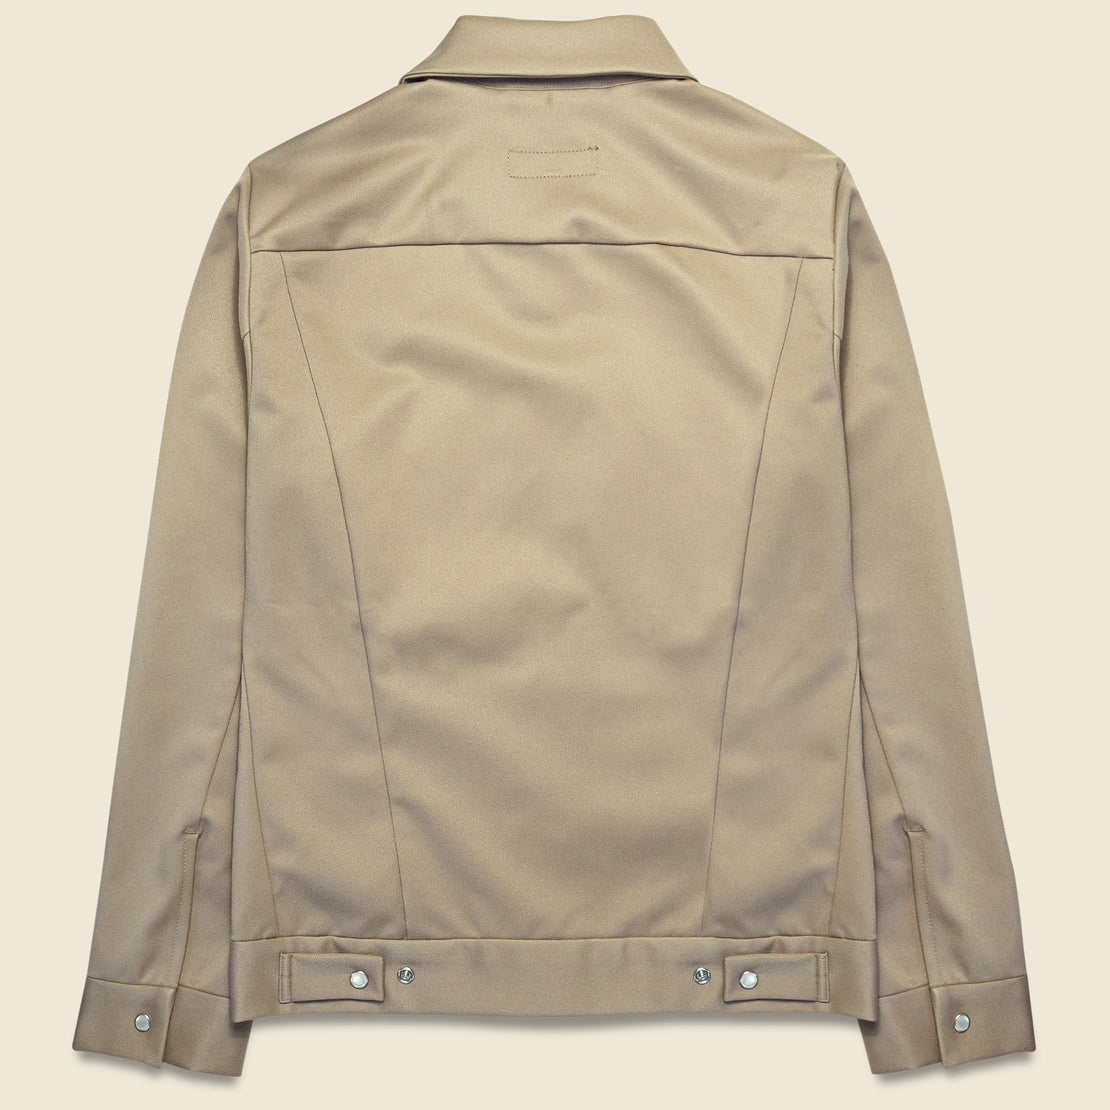 Nova Stretch Trucker Jacket - Khaki - Monitaly - STAG Provisions - W - Outerwear - Coat/Jacket